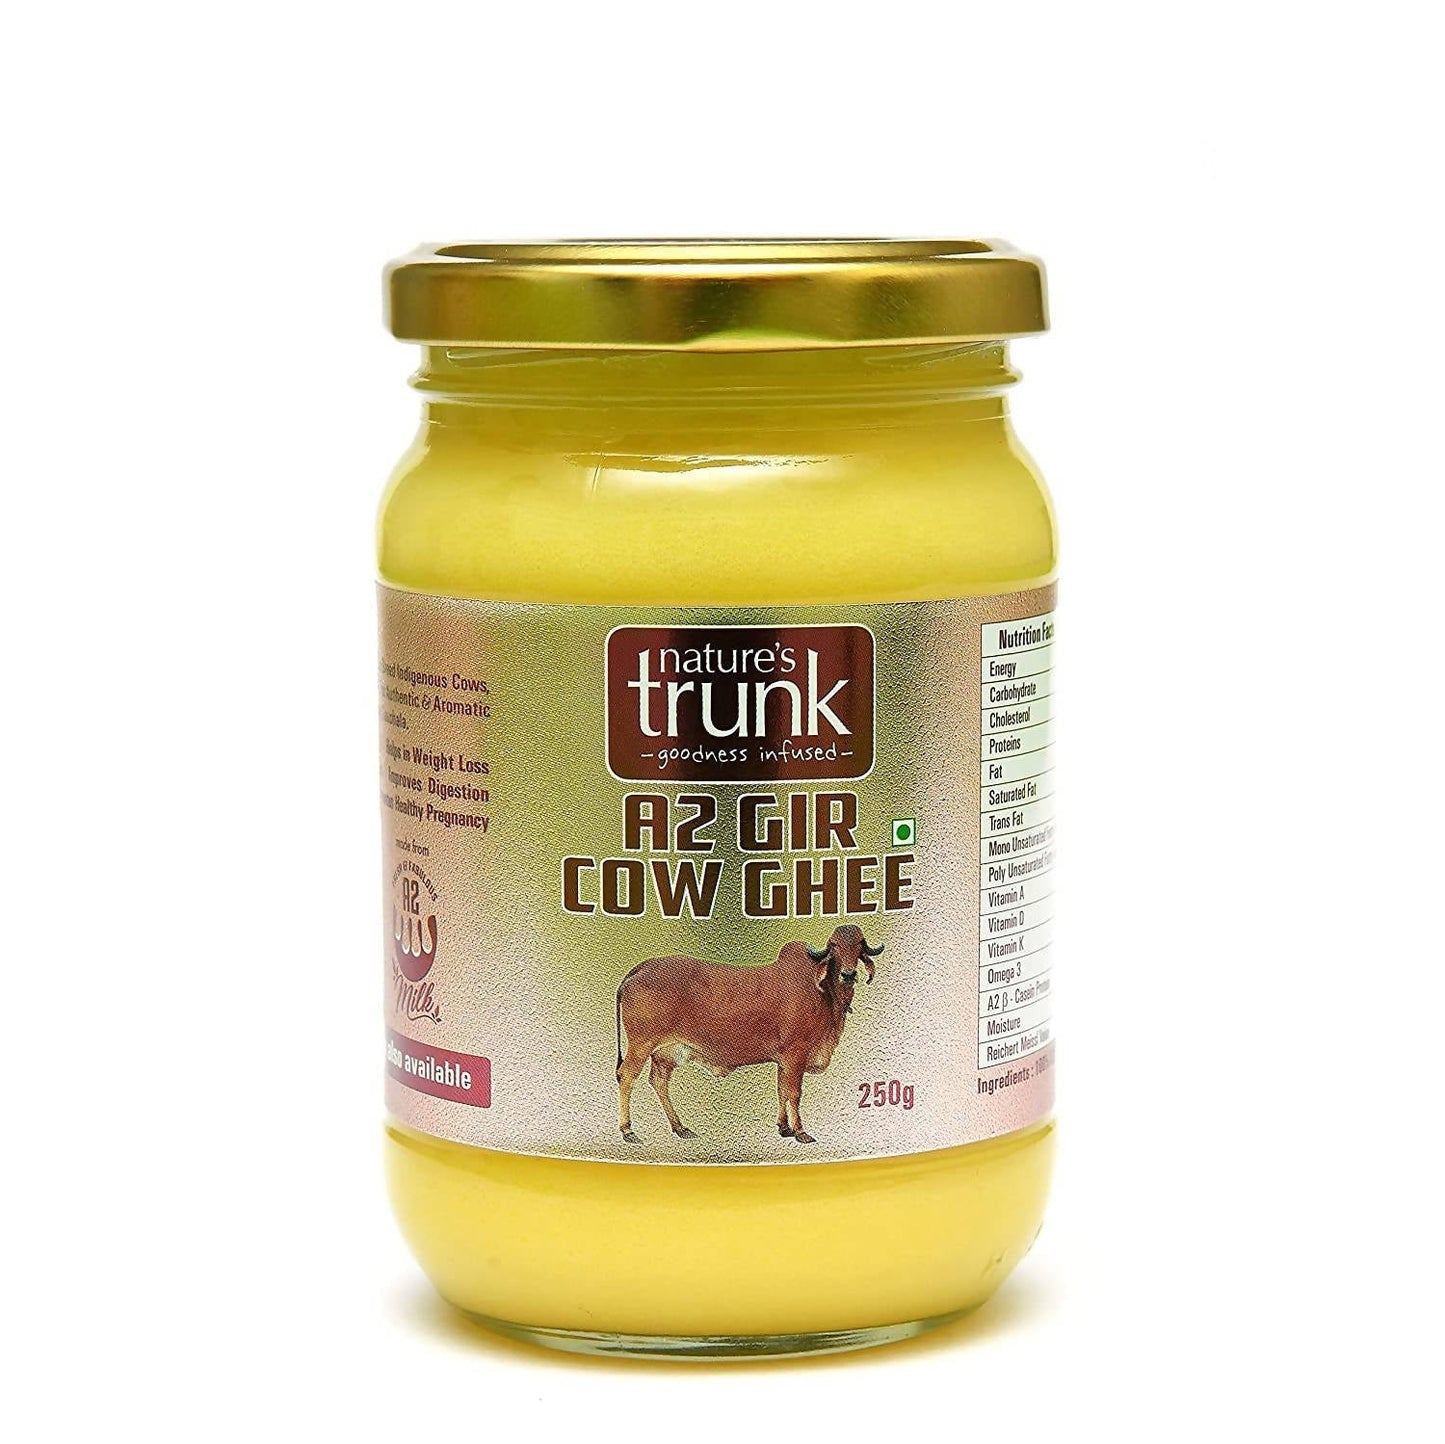 Nature's Trunk A2 Gir Cow Ghee -  USA, Australia, Canada 